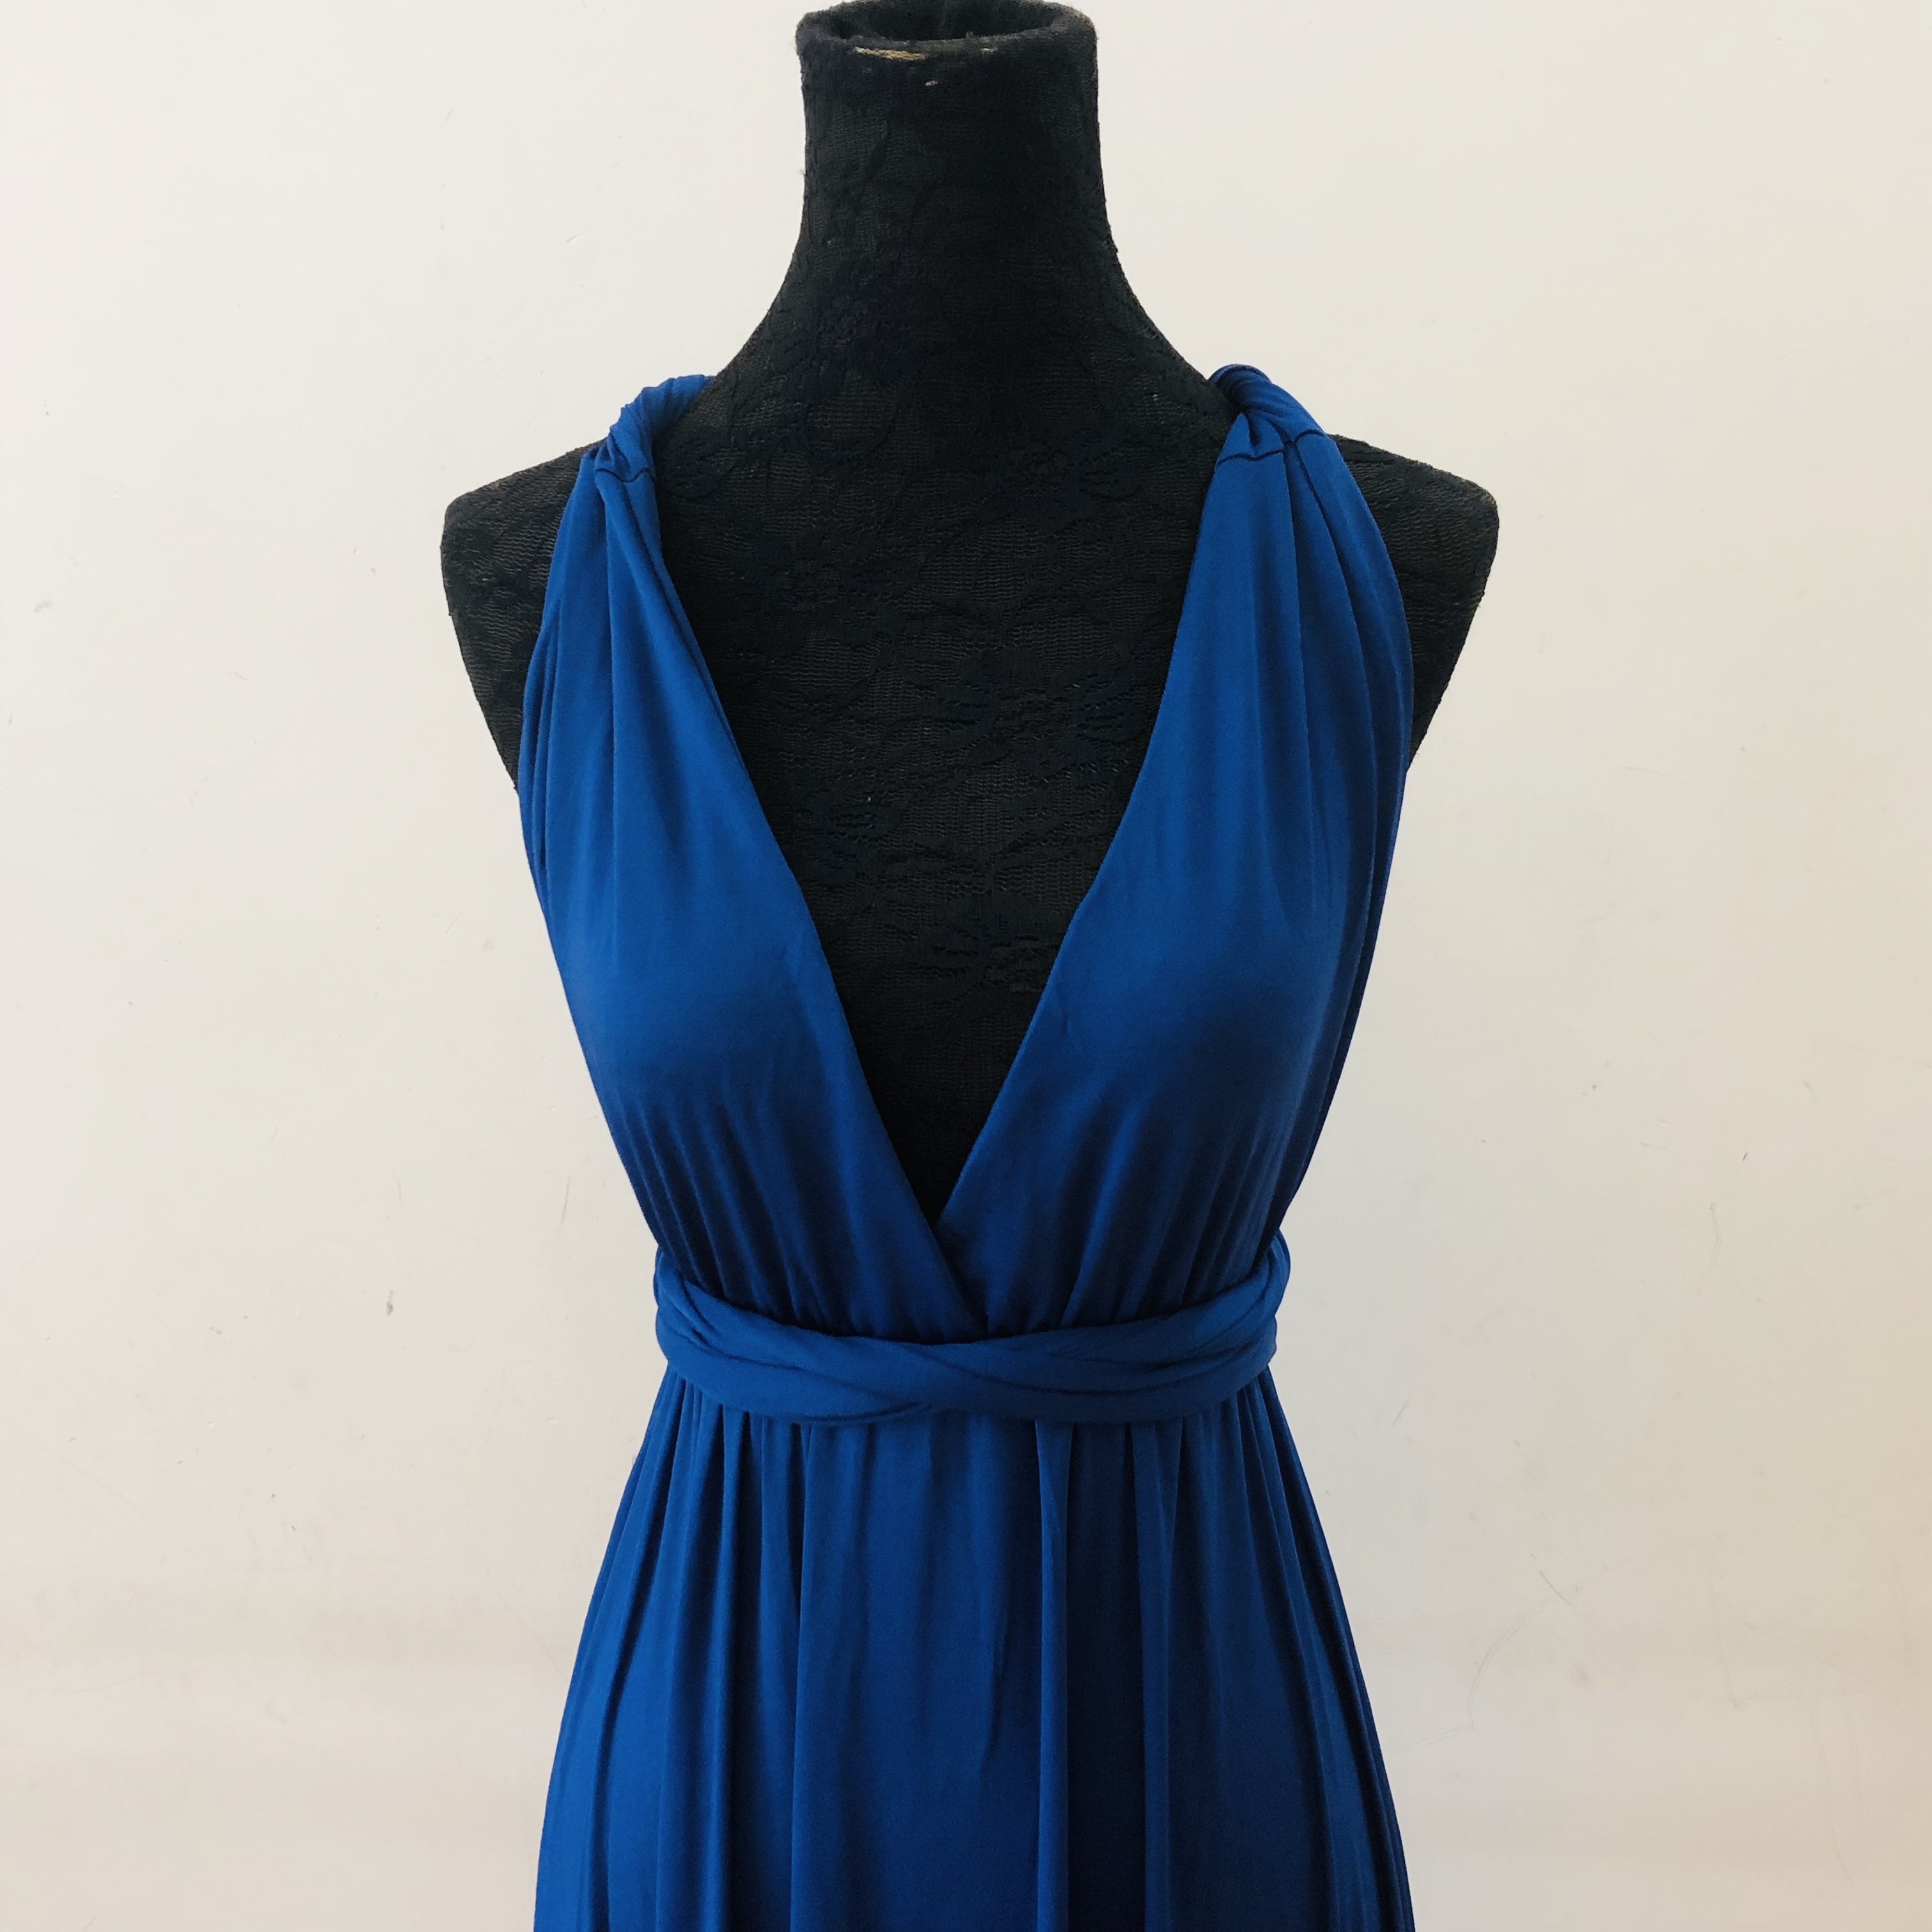 Long Dark Blue Multi-Way Bridesmaid Dress, Women Summer Dress,Convertible Dresses